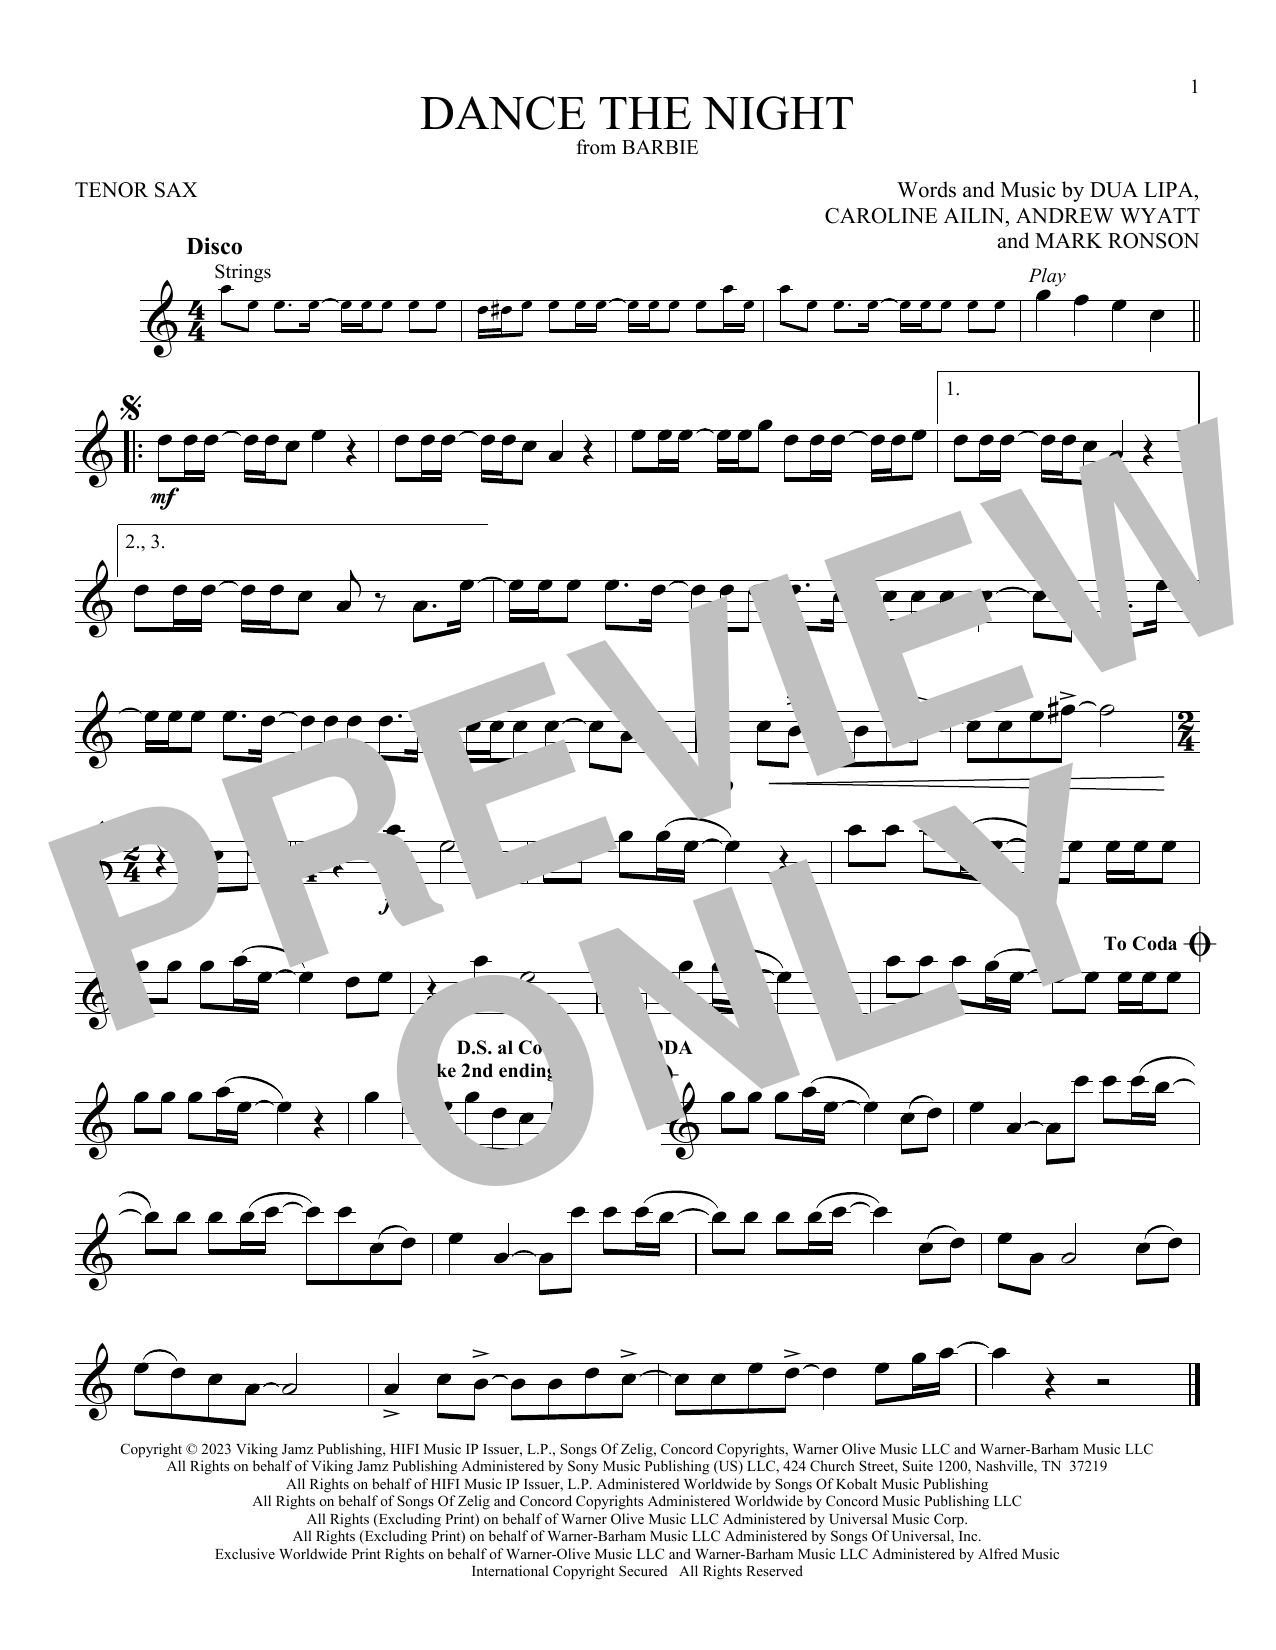 Dua Lipa Dance The Night (from Barbie) sheet music notes printable PDF score